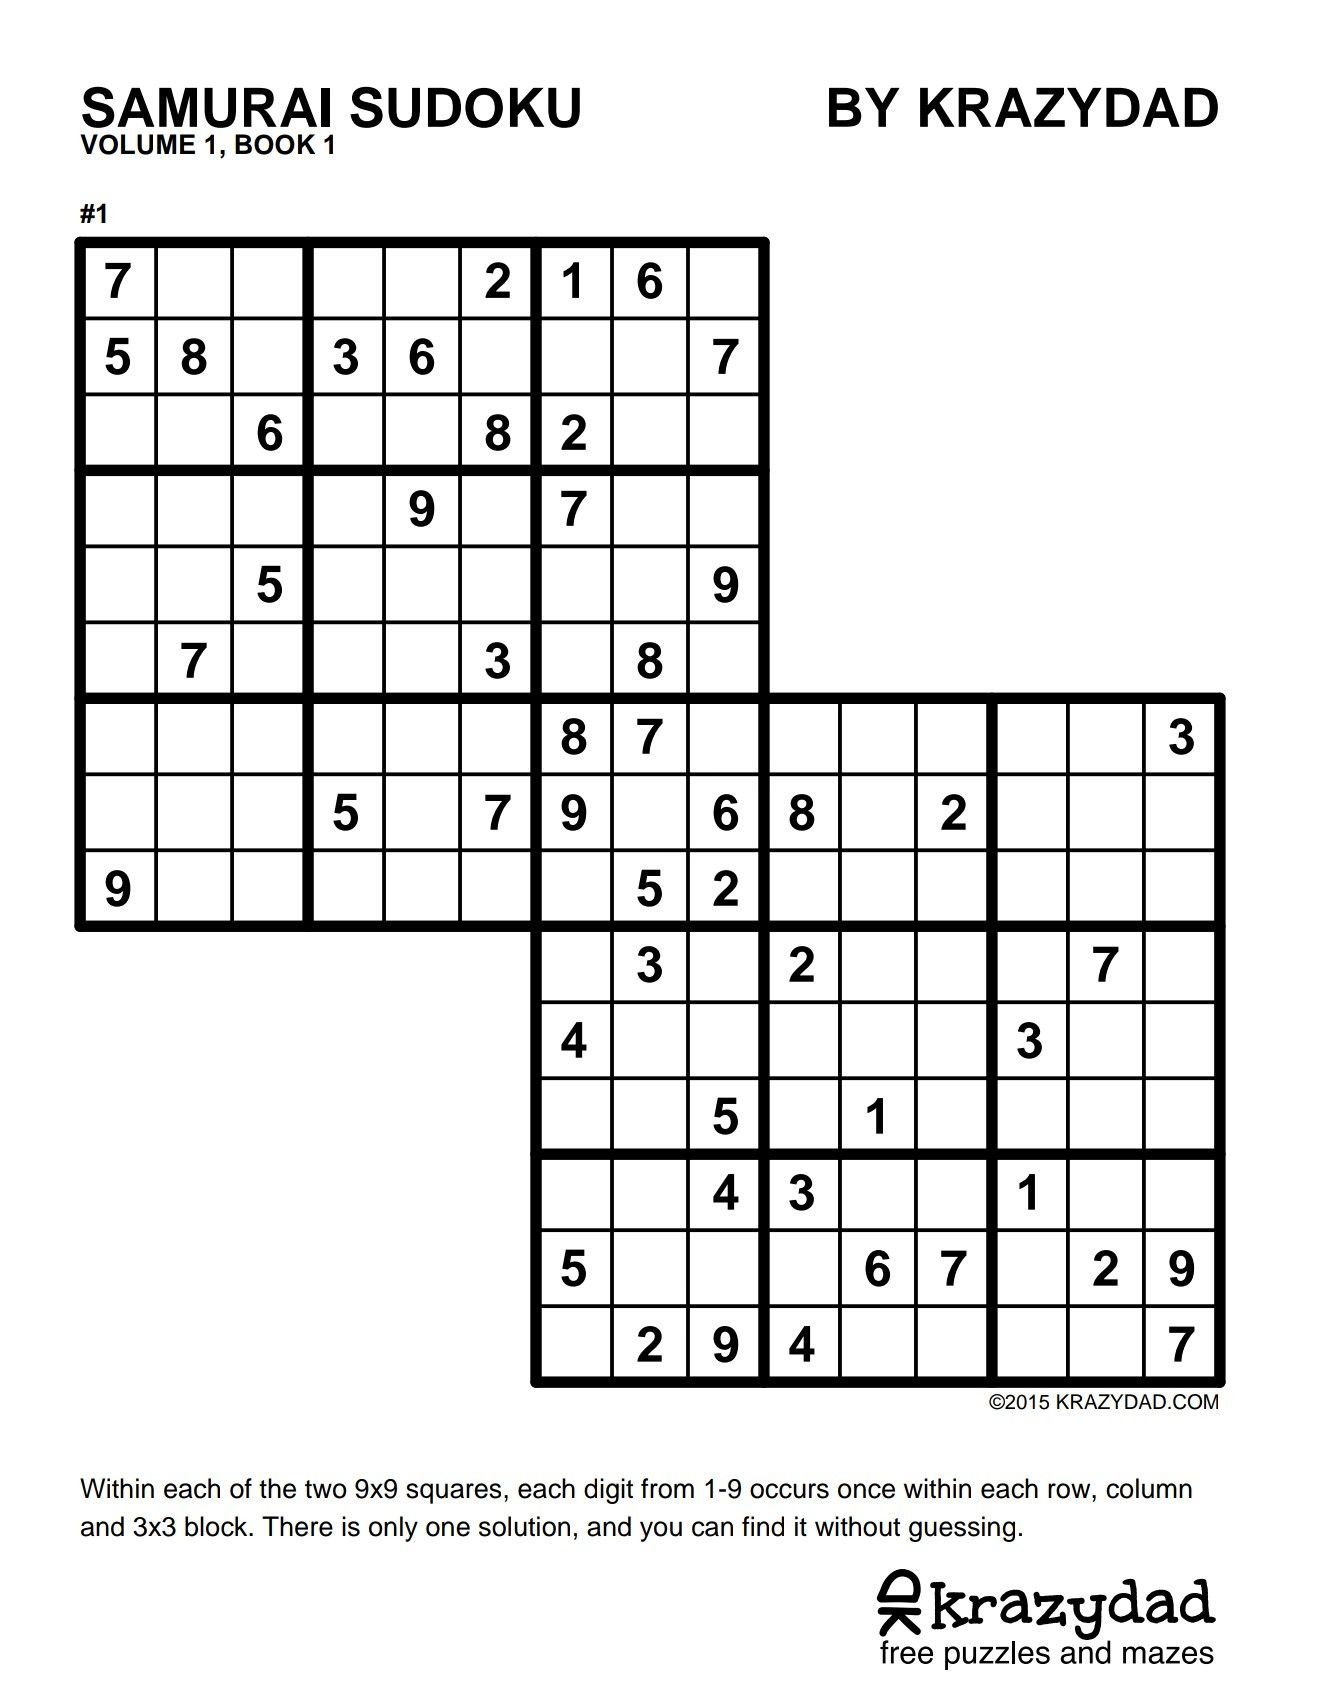 Challenging Sudoku Puzzleskrazydad